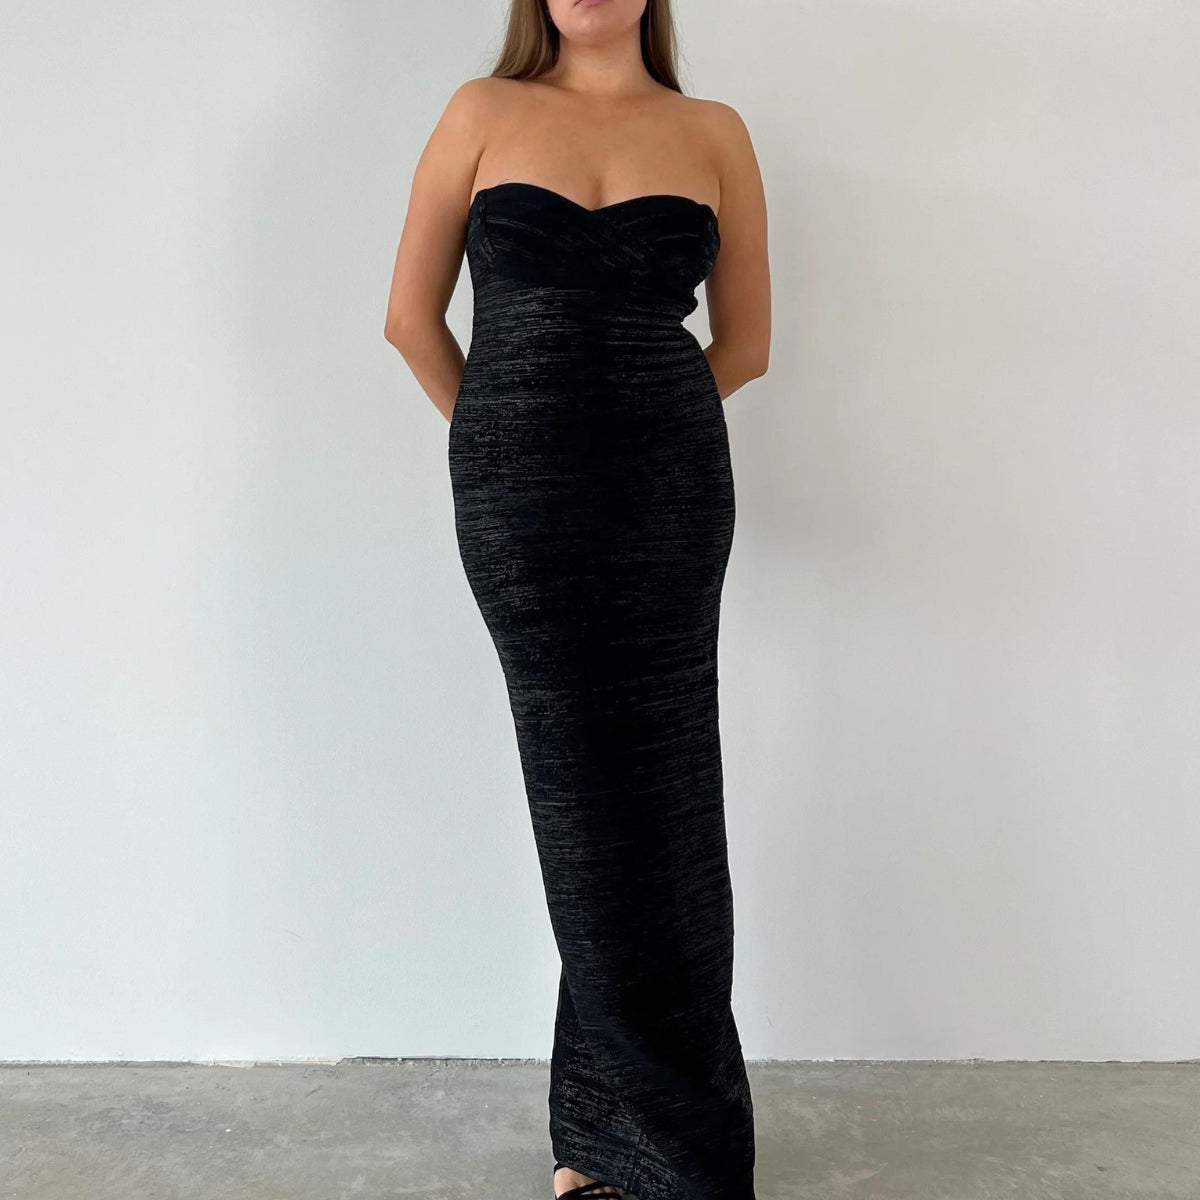 BNWT HERVÉ LÉGER Black Foil Metallic Bandage Gown in Size L - MSRP $1,590.00